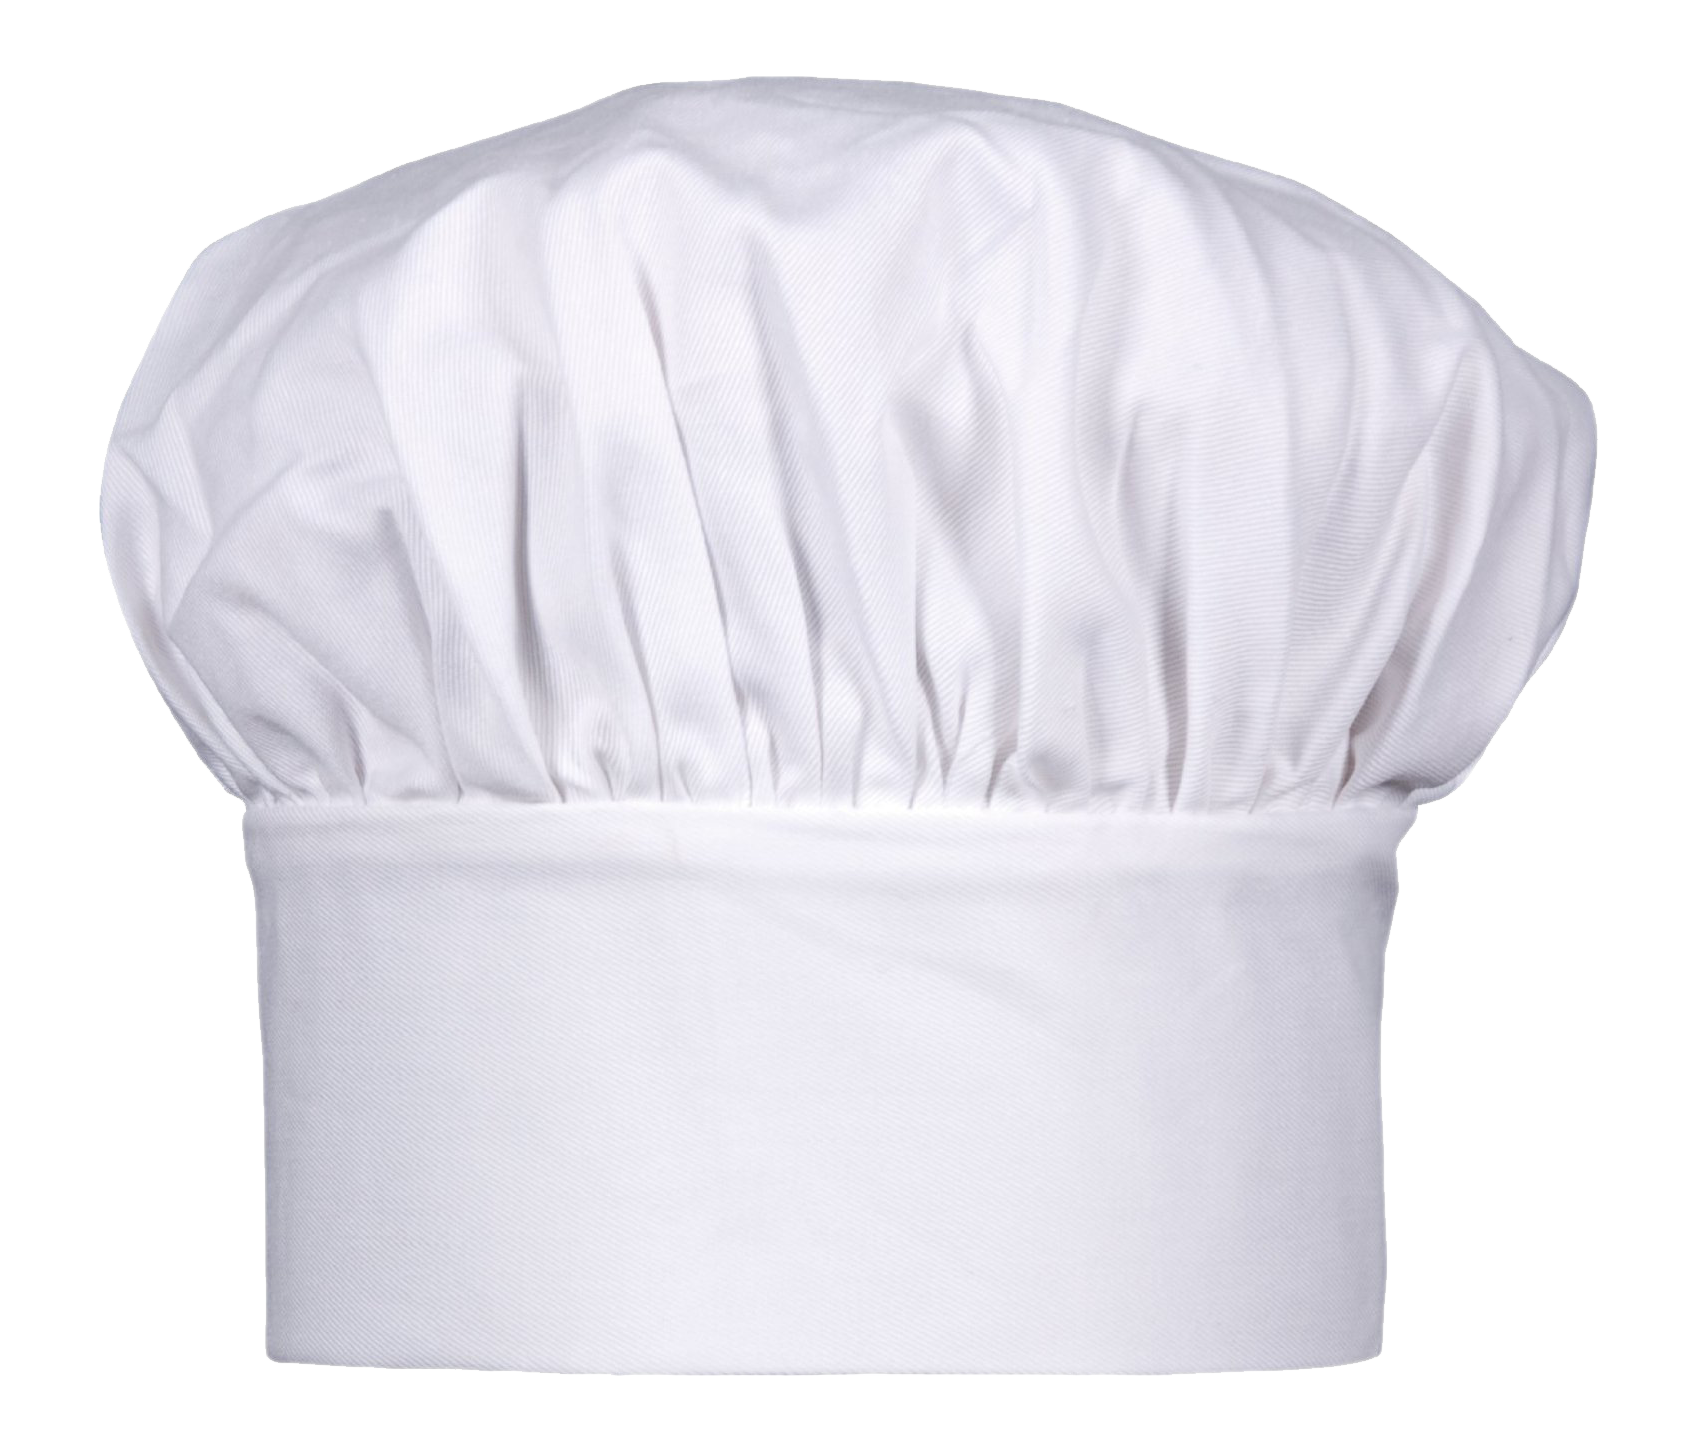 Fondo transparente del sombrero del chef